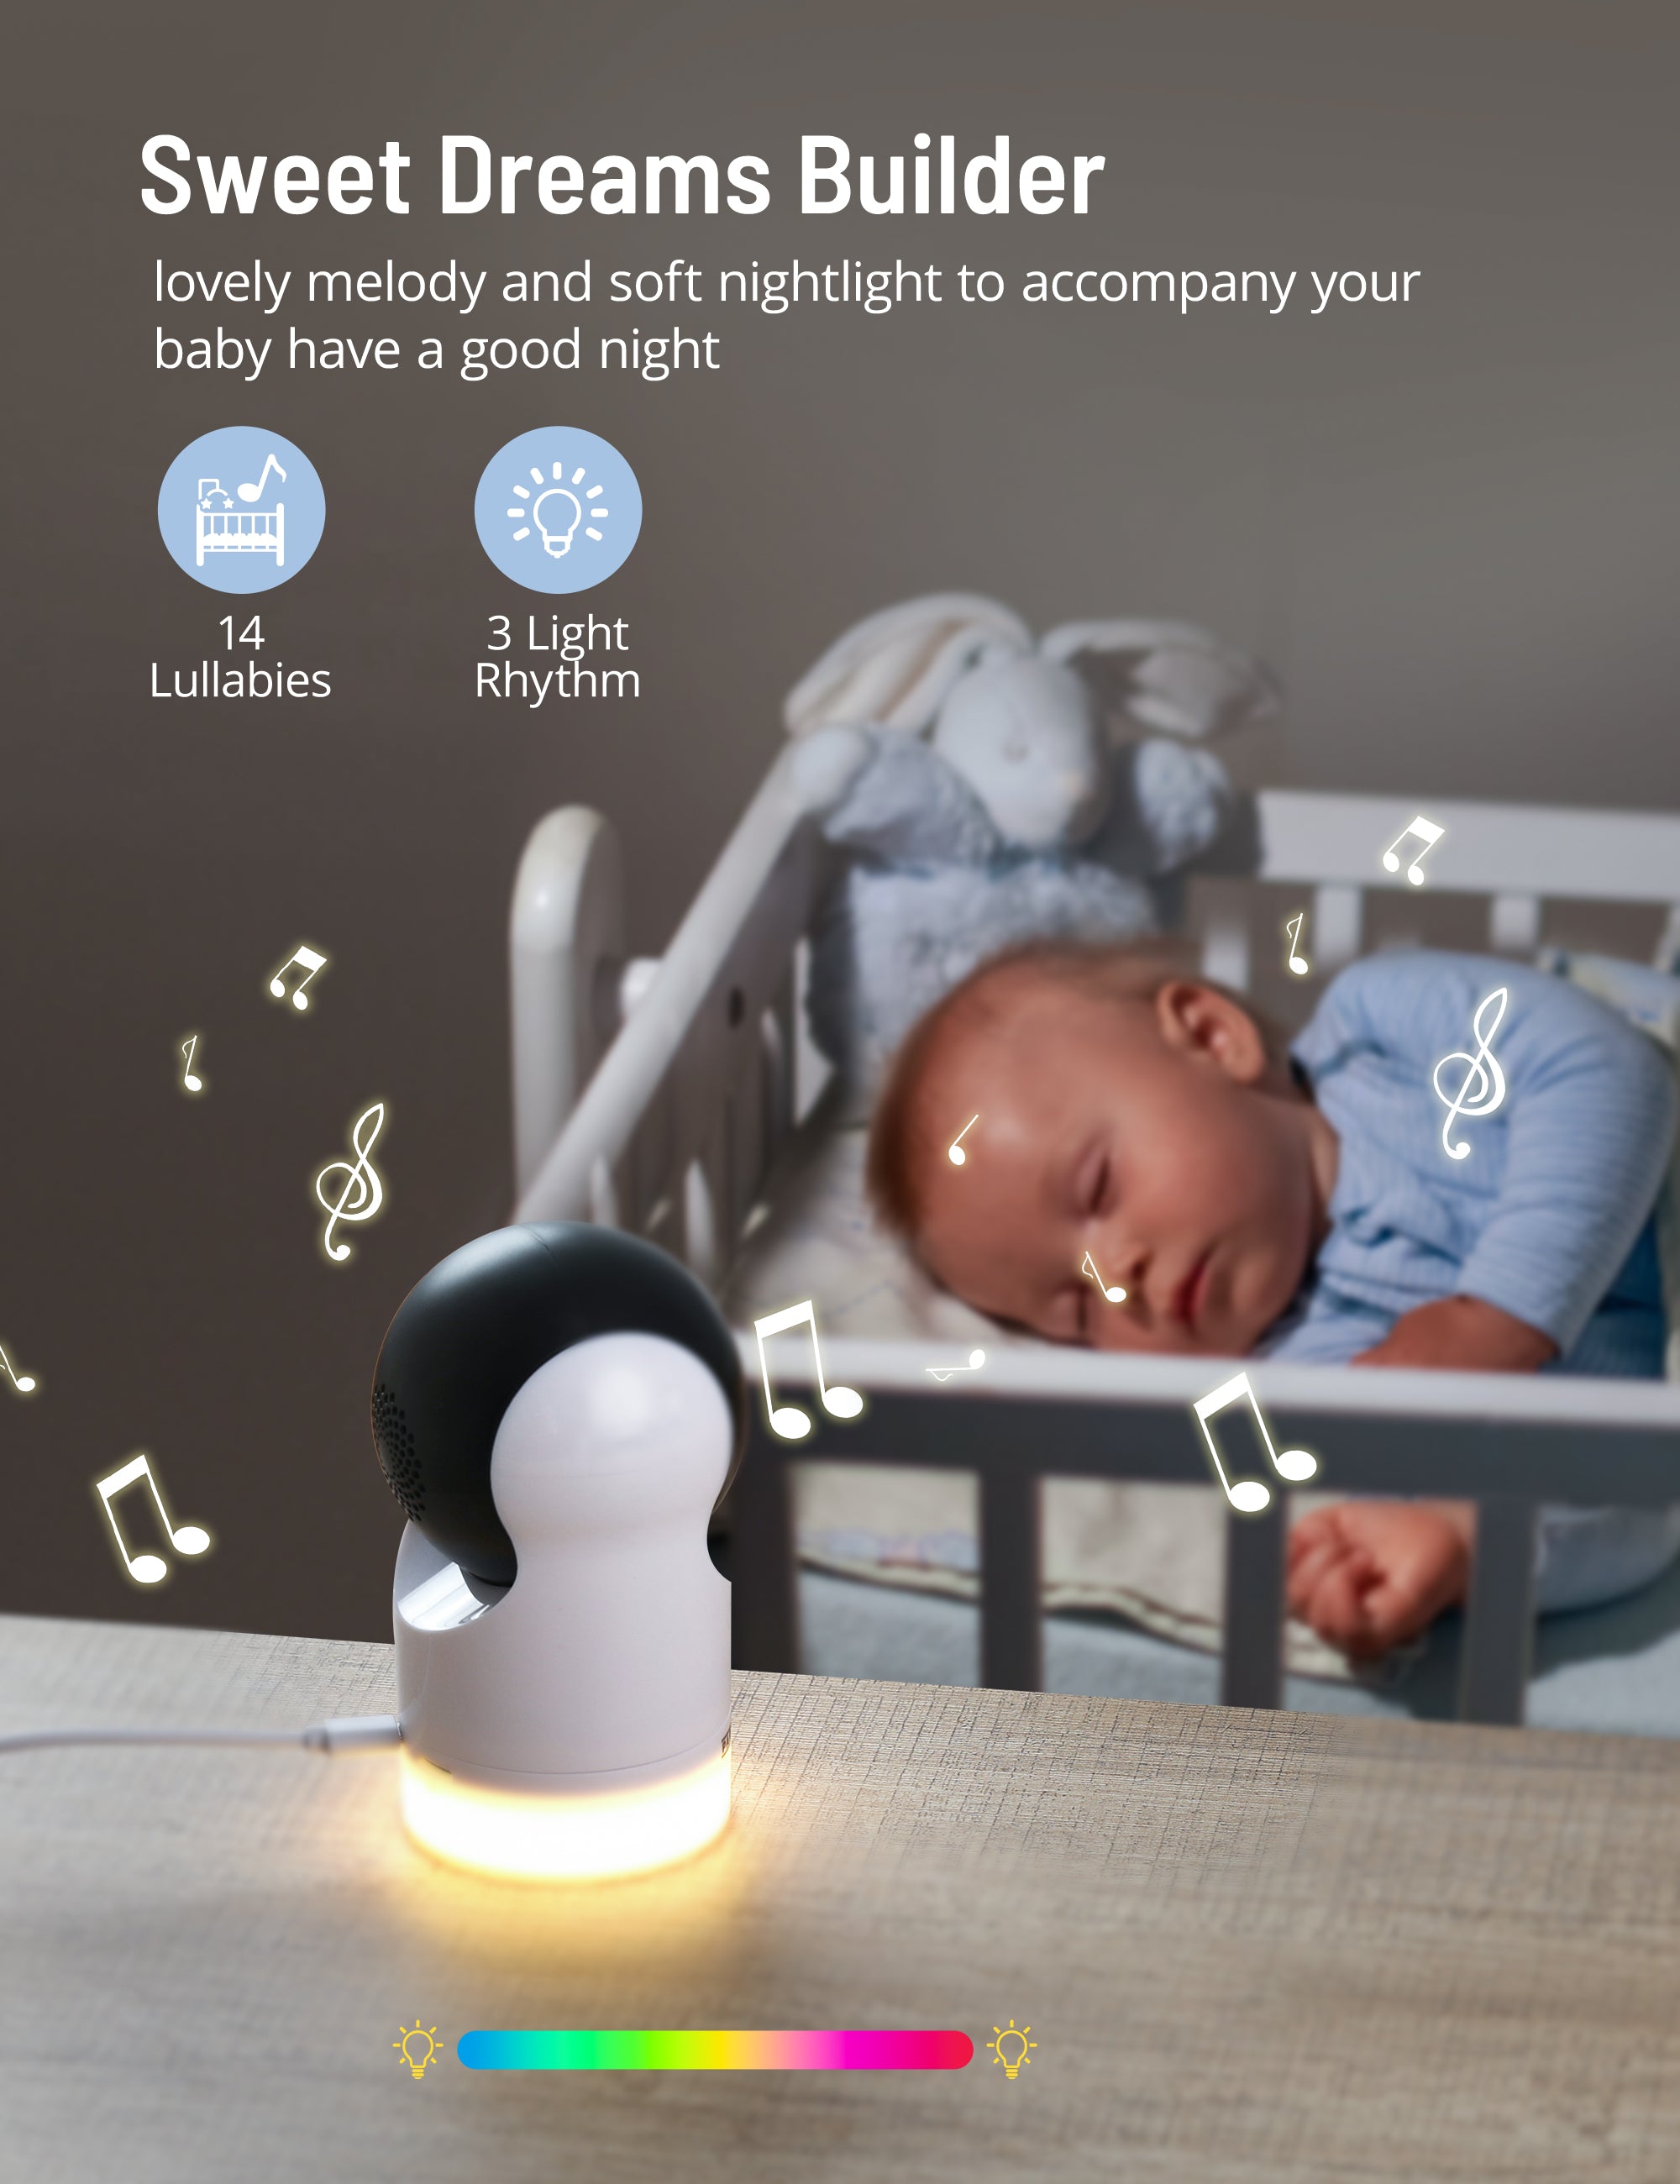 Paris Rhône 2K HD Video Baby Monitor with Smart App